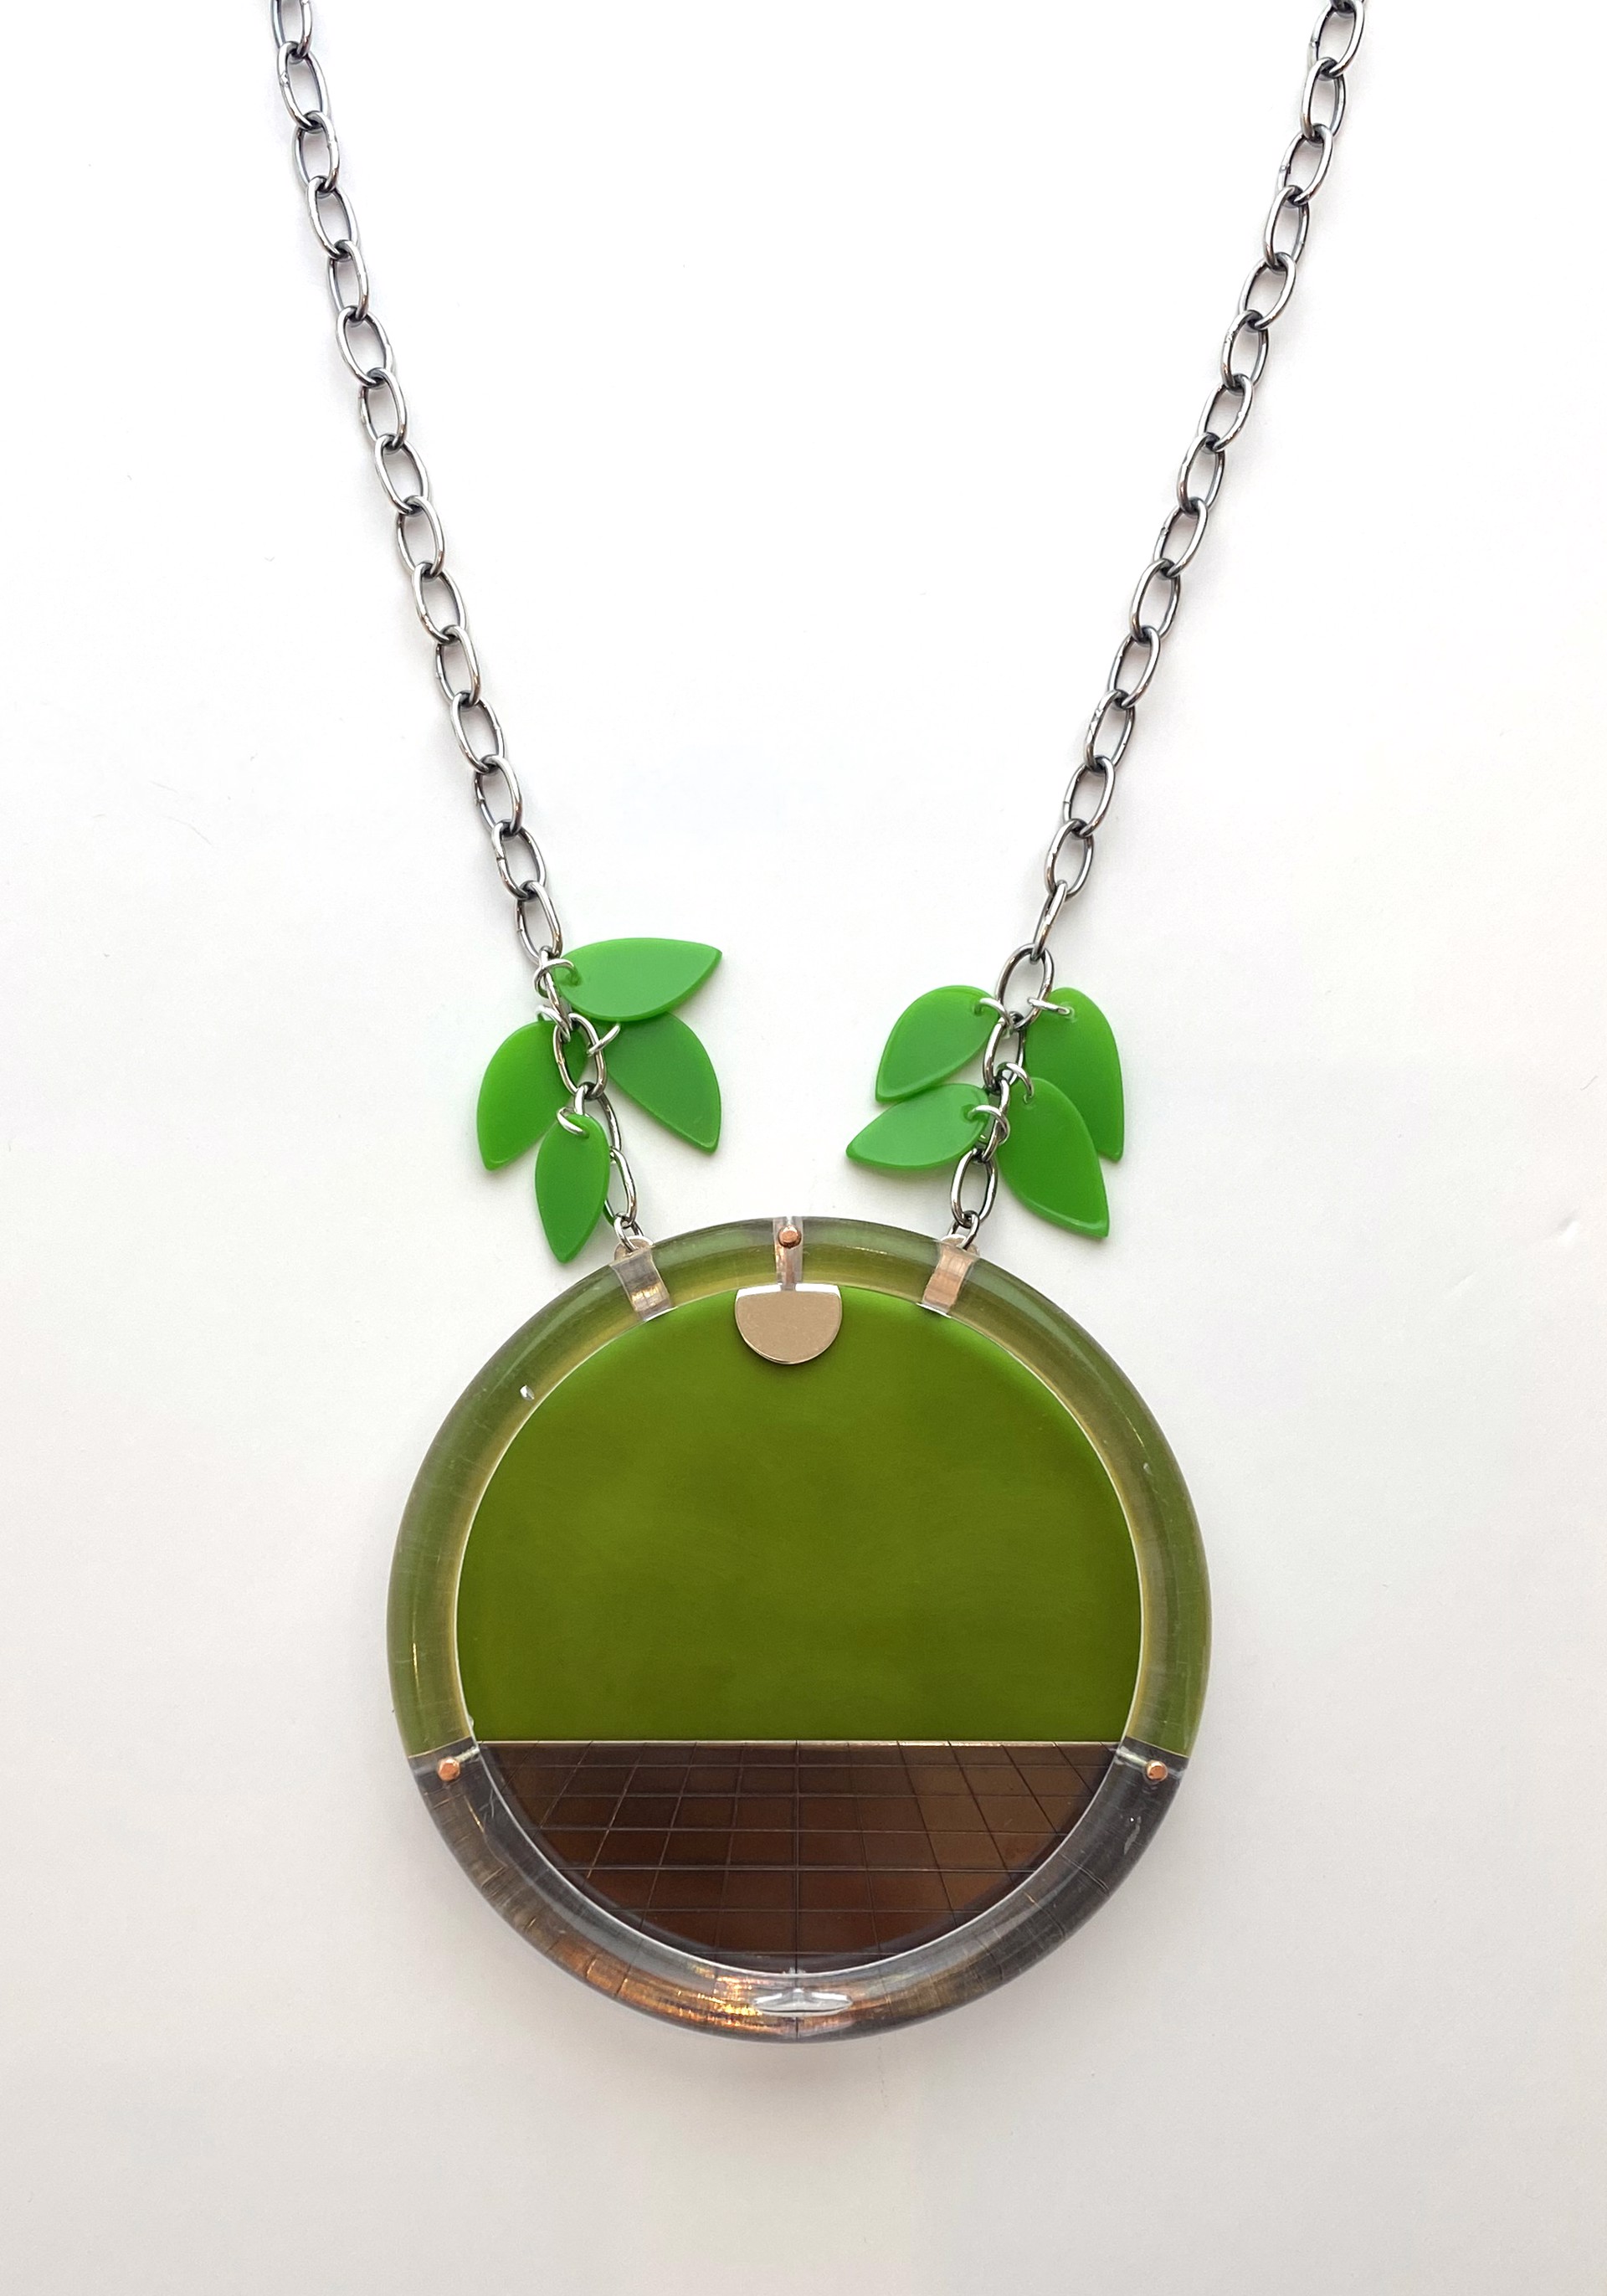 DG LG Medallion (necklace) by Tabitha Ott